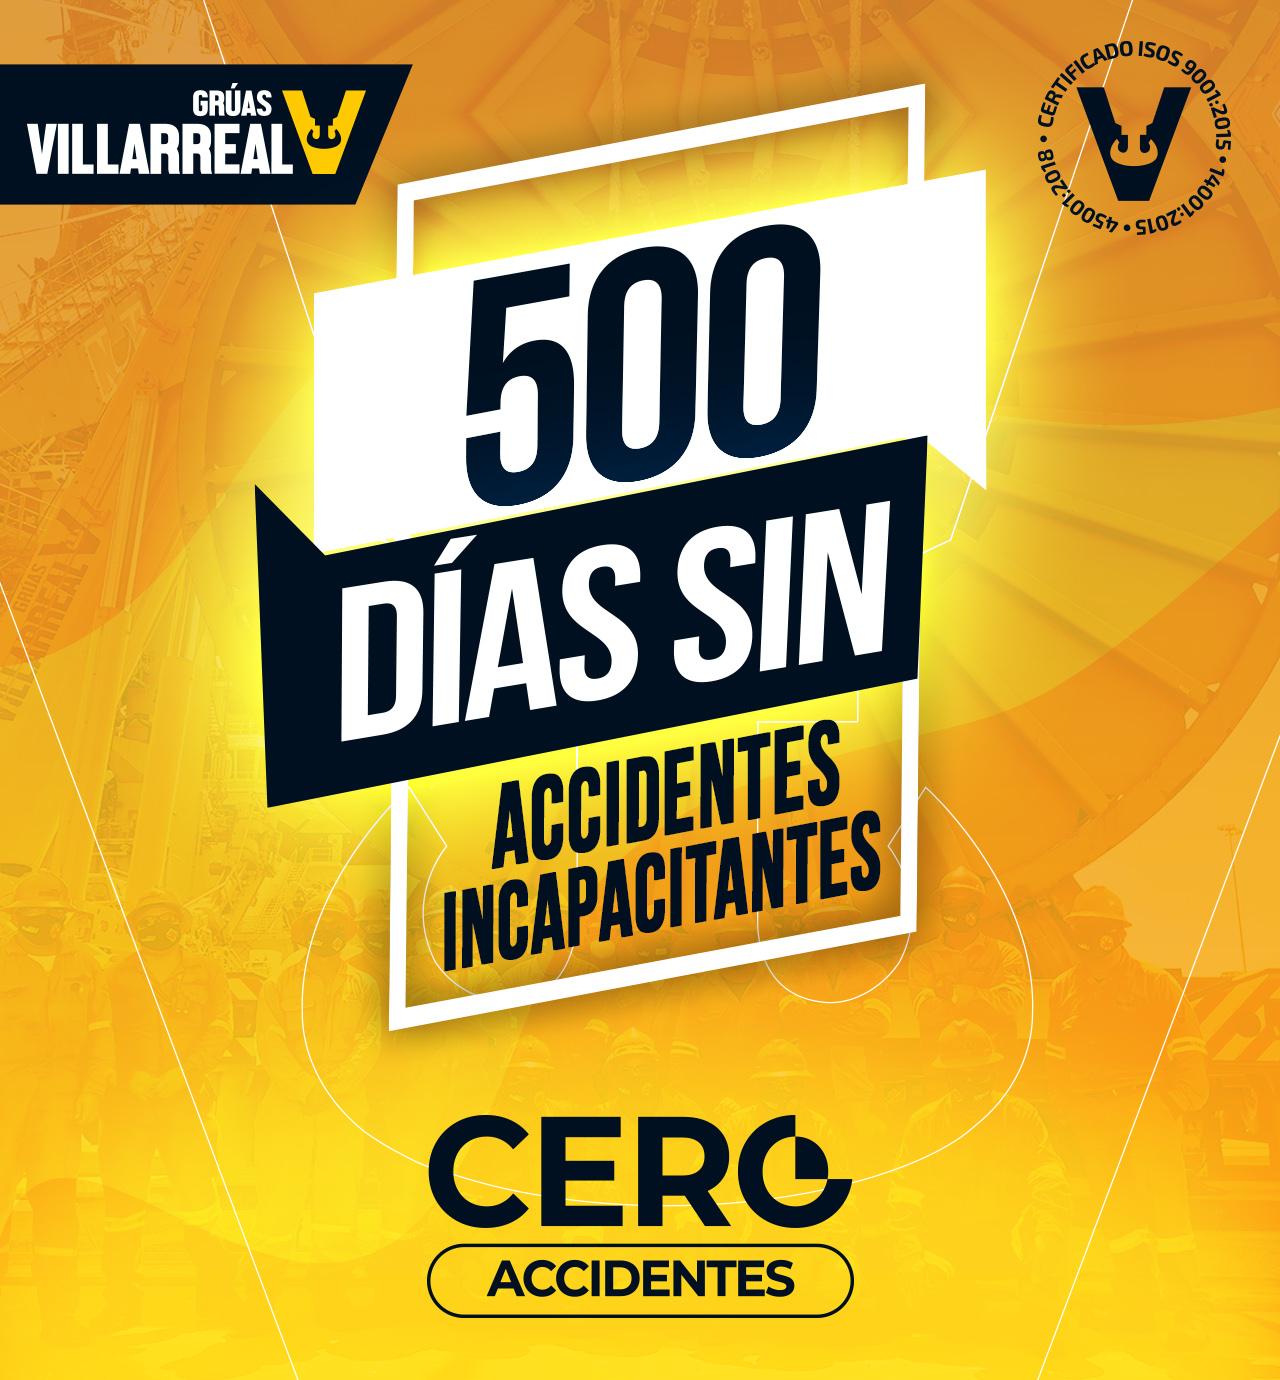 We celebrate 500 days without incapacitating injuries